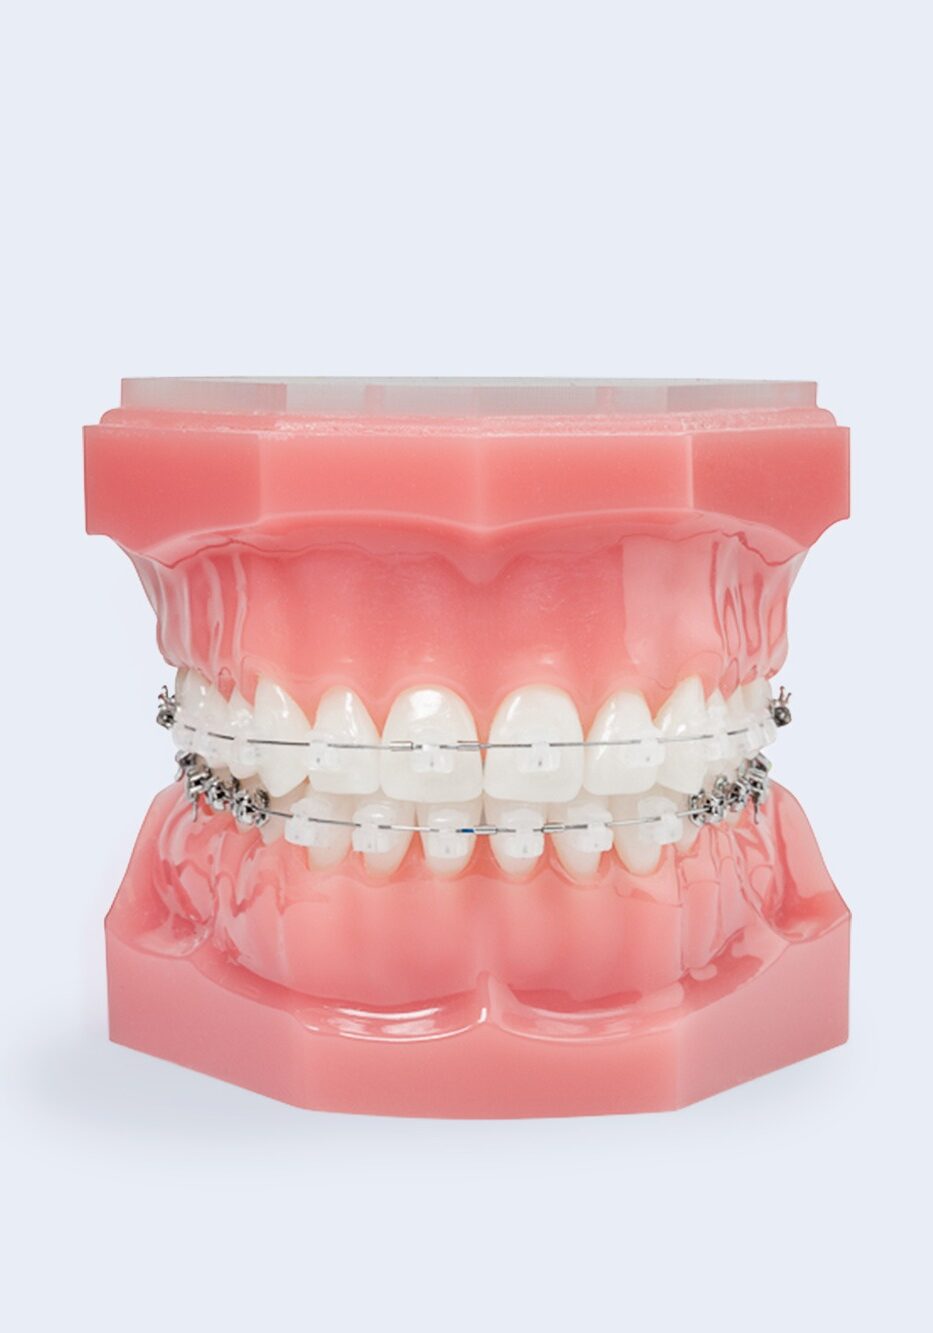 Clear Braces - Dietrich & Kelso Orthodontics